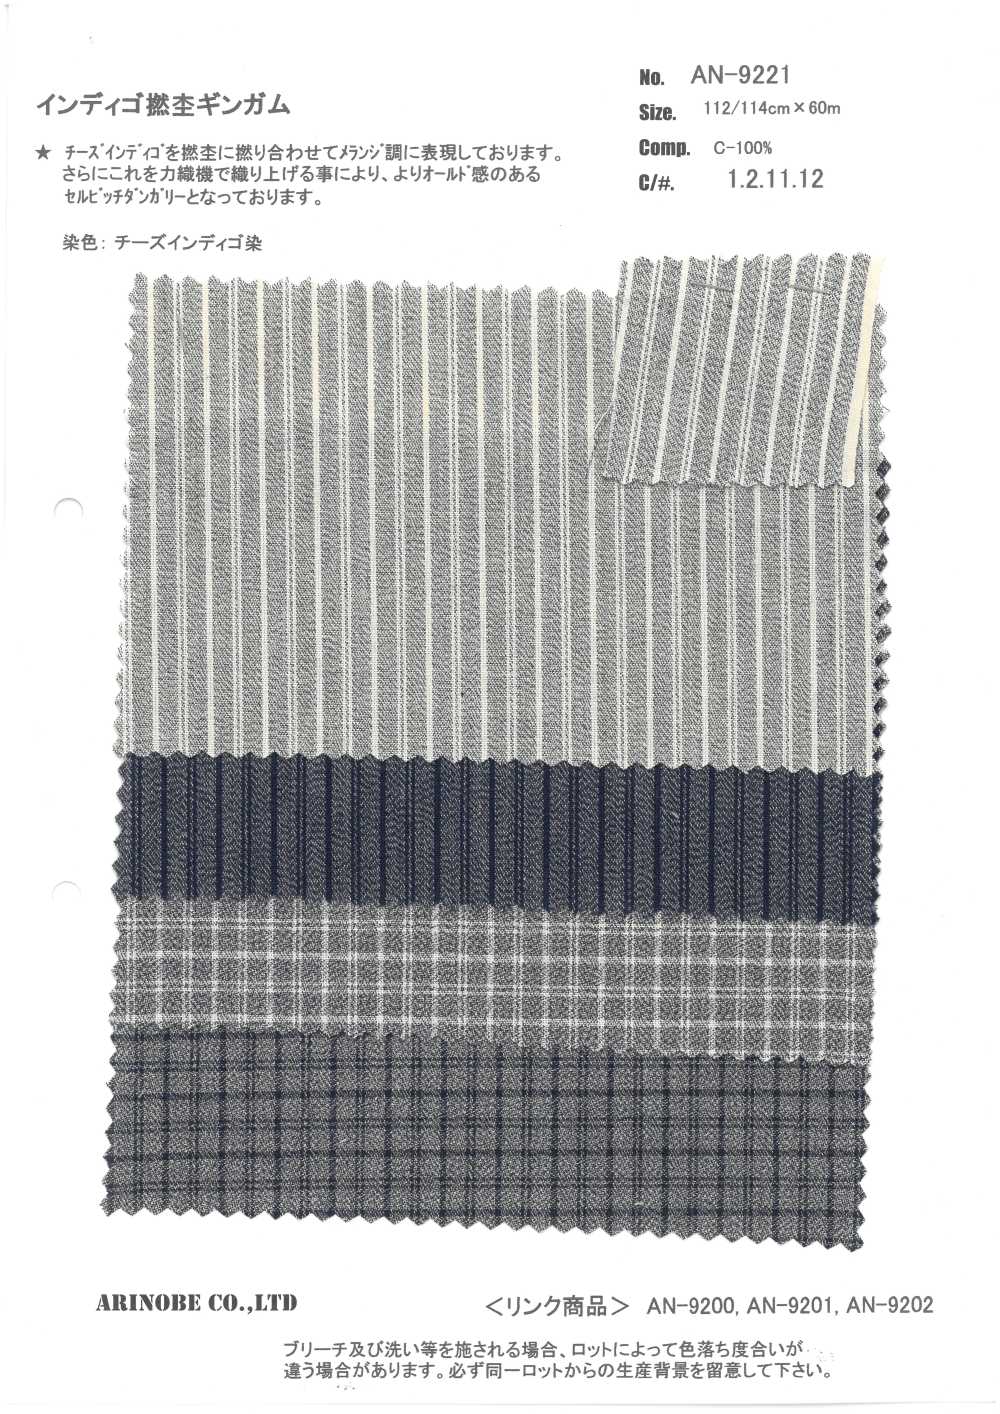 AN-9221 Indigo Twisted Heather Gingham[Textilgewebe] ARINOBE CO., LTD.